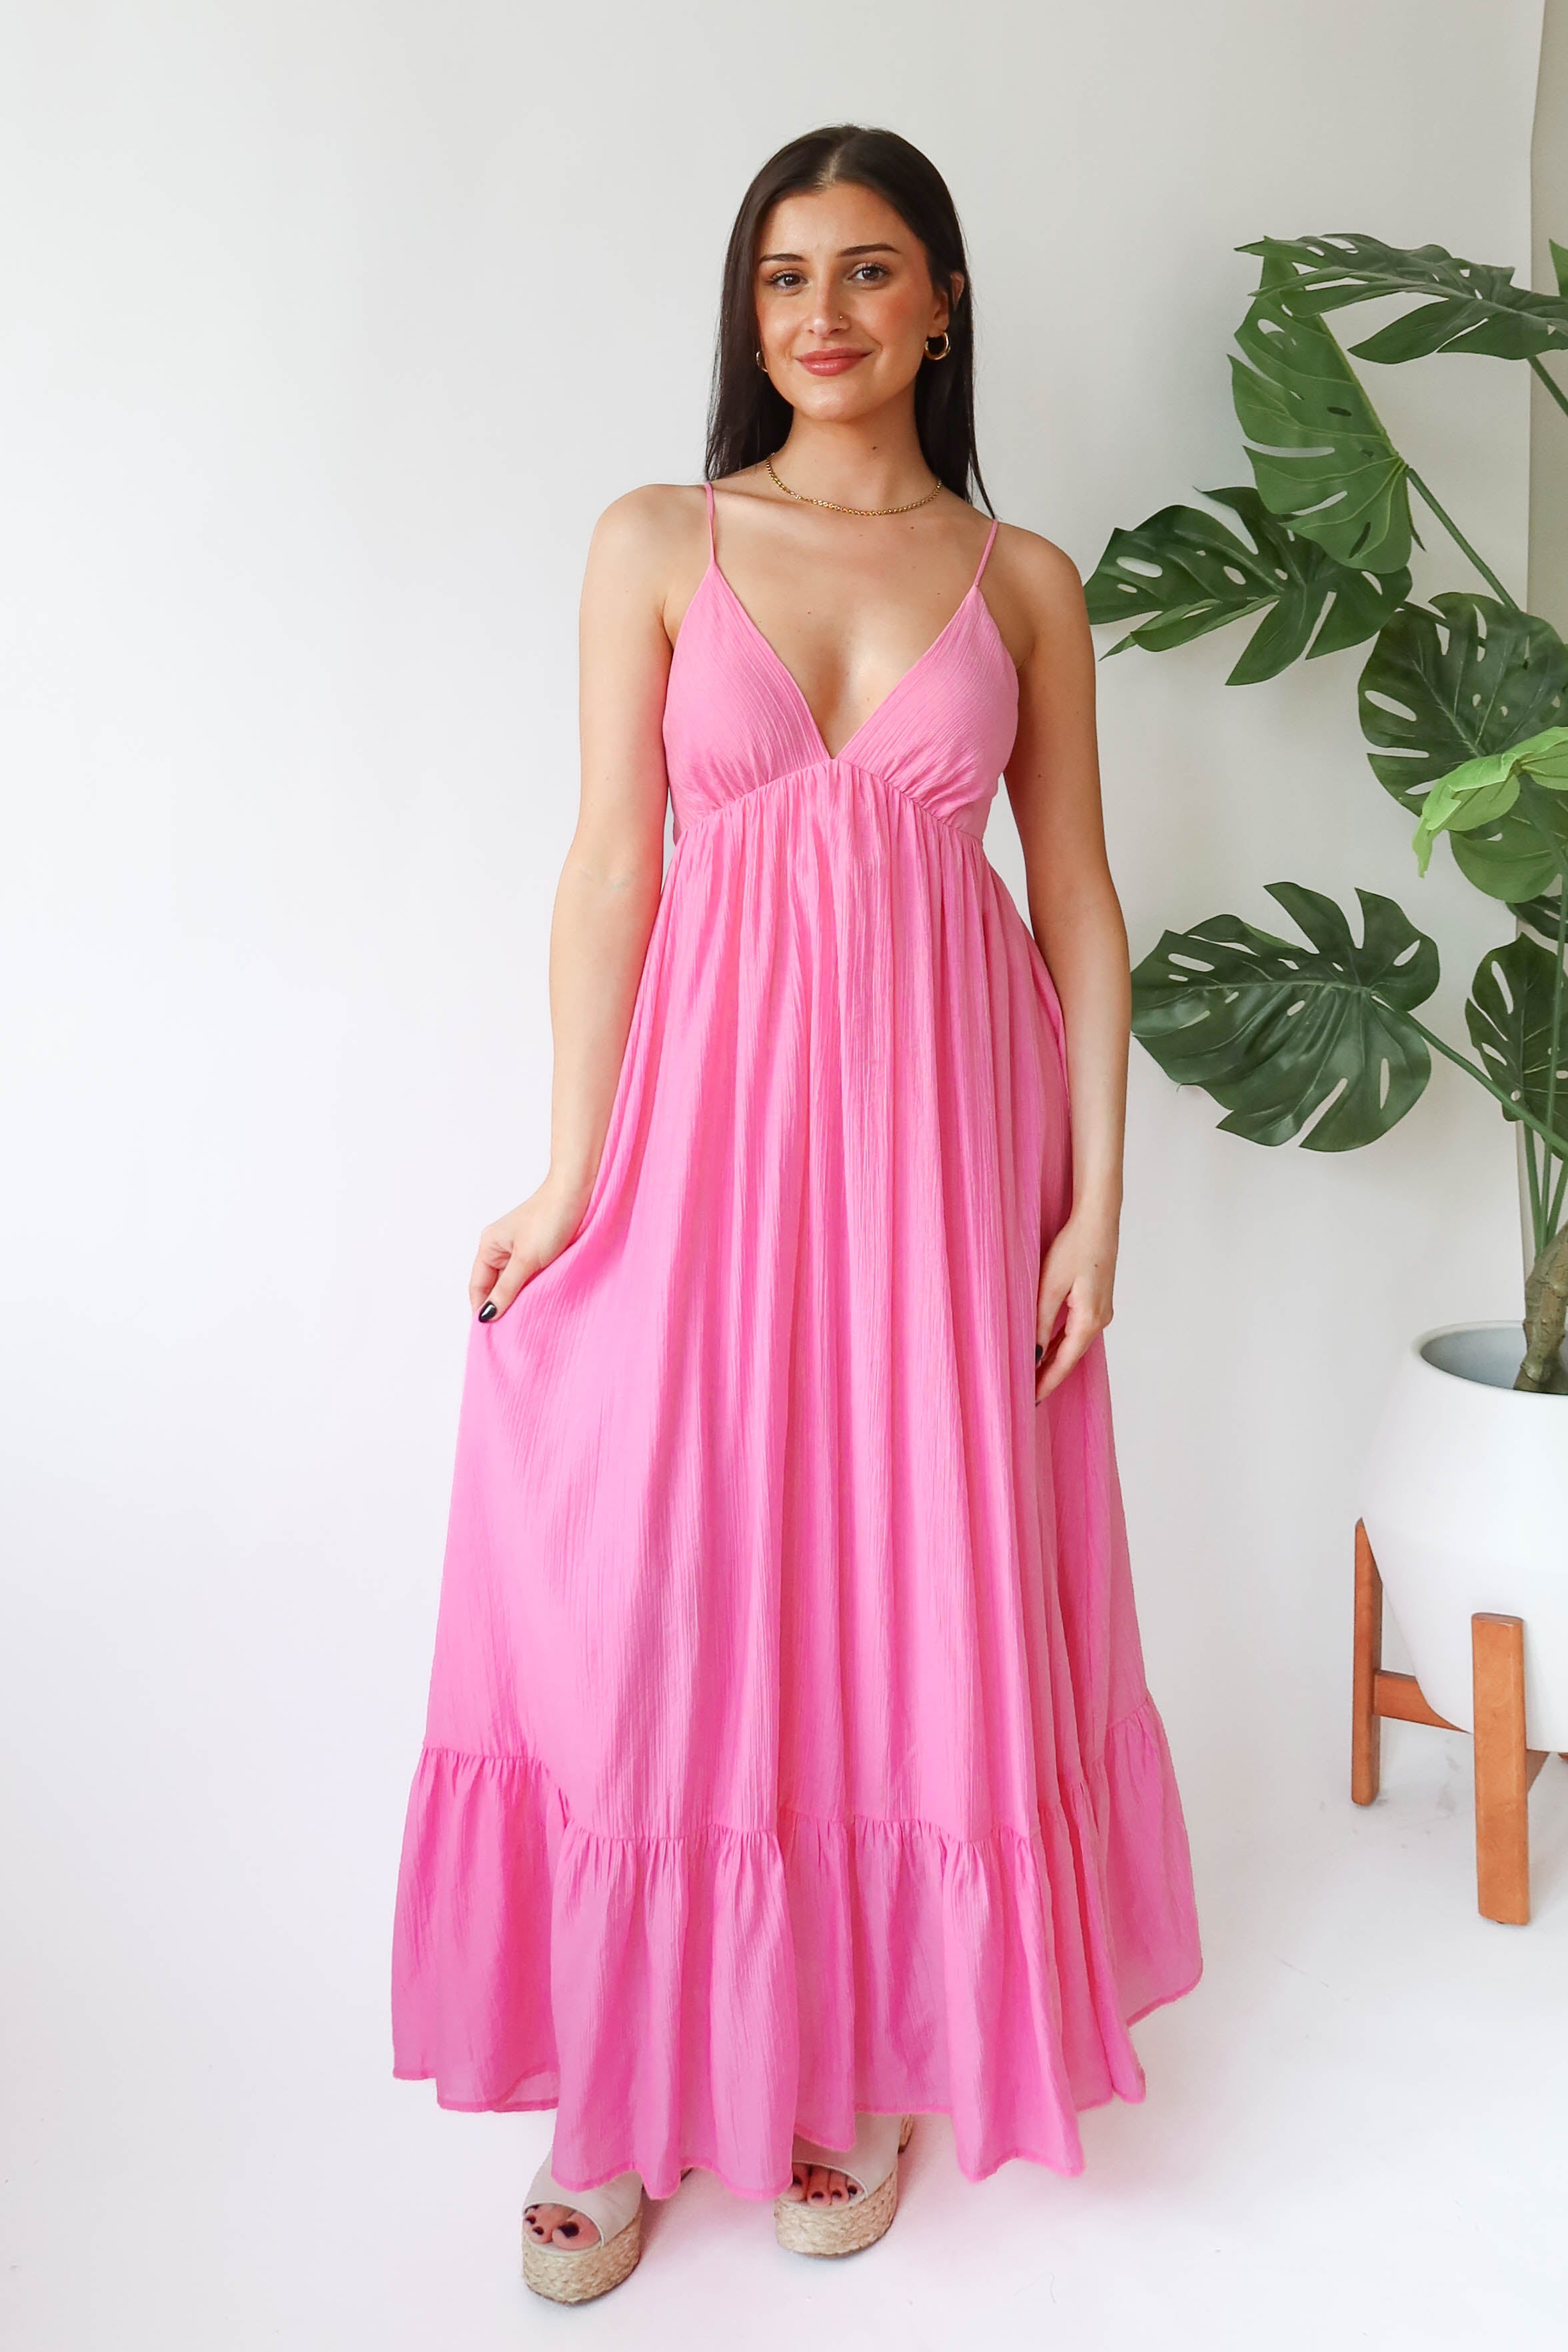 Shine Bright Maxi Dress in Pink